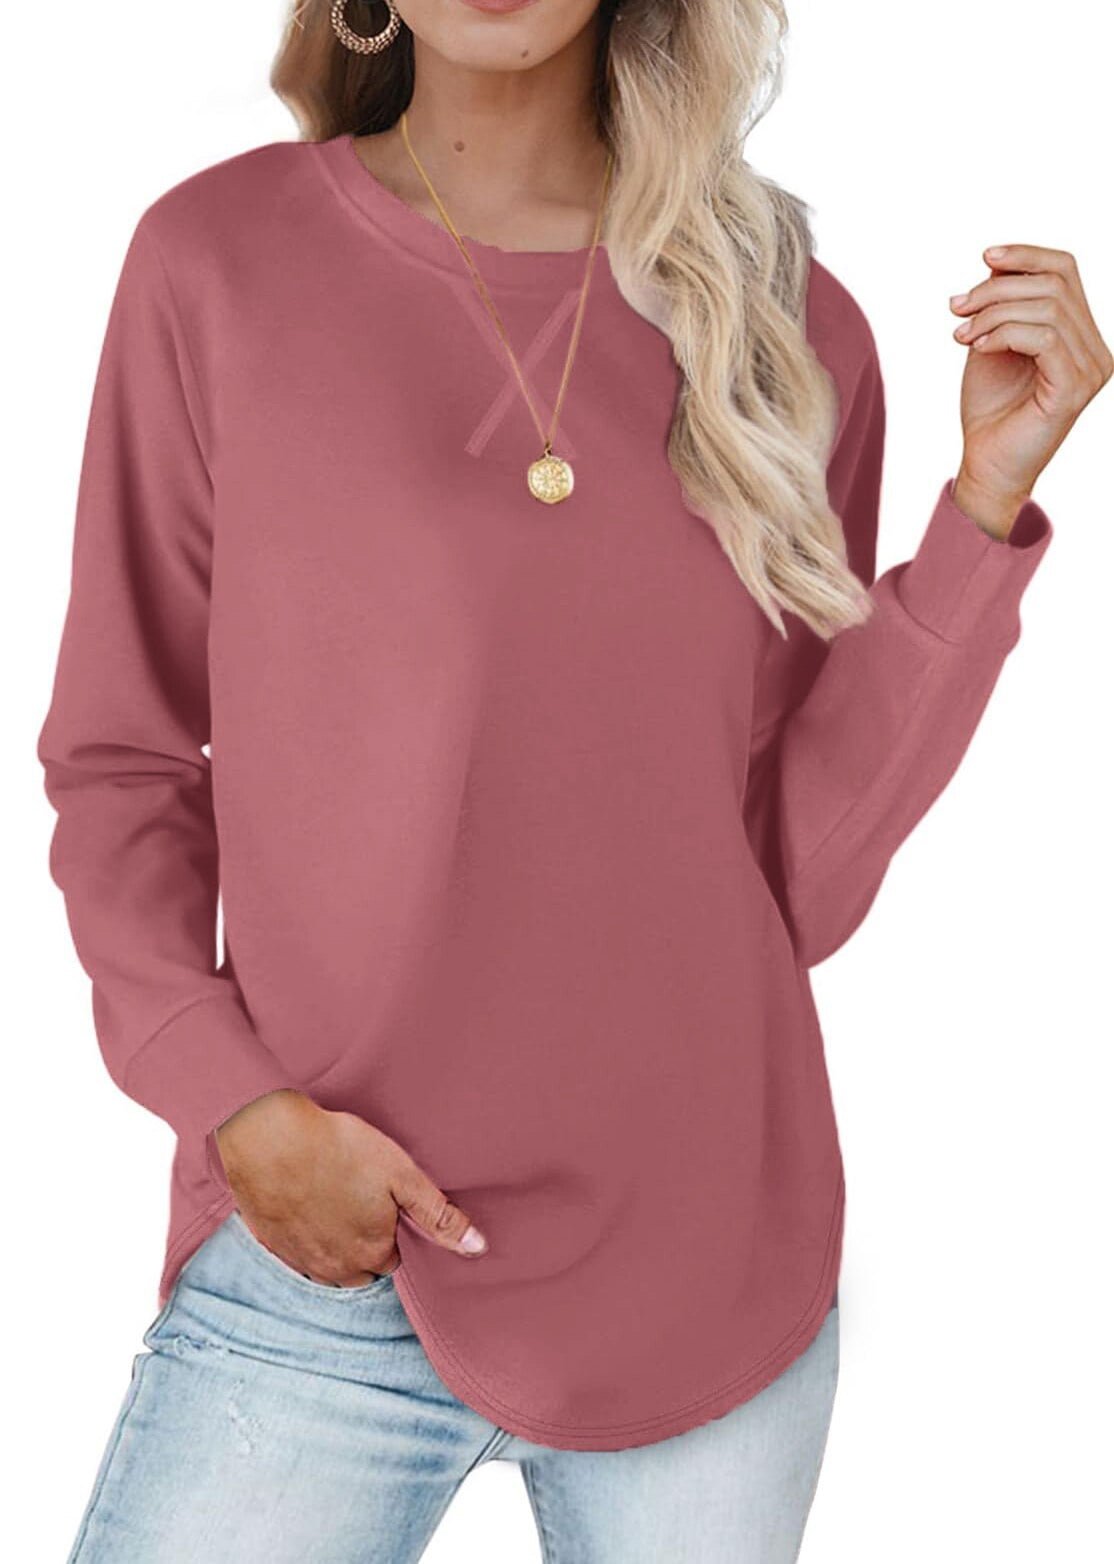 Fantaslook Plus Size Sweatshirts for Women Crewneck Casual Tunic